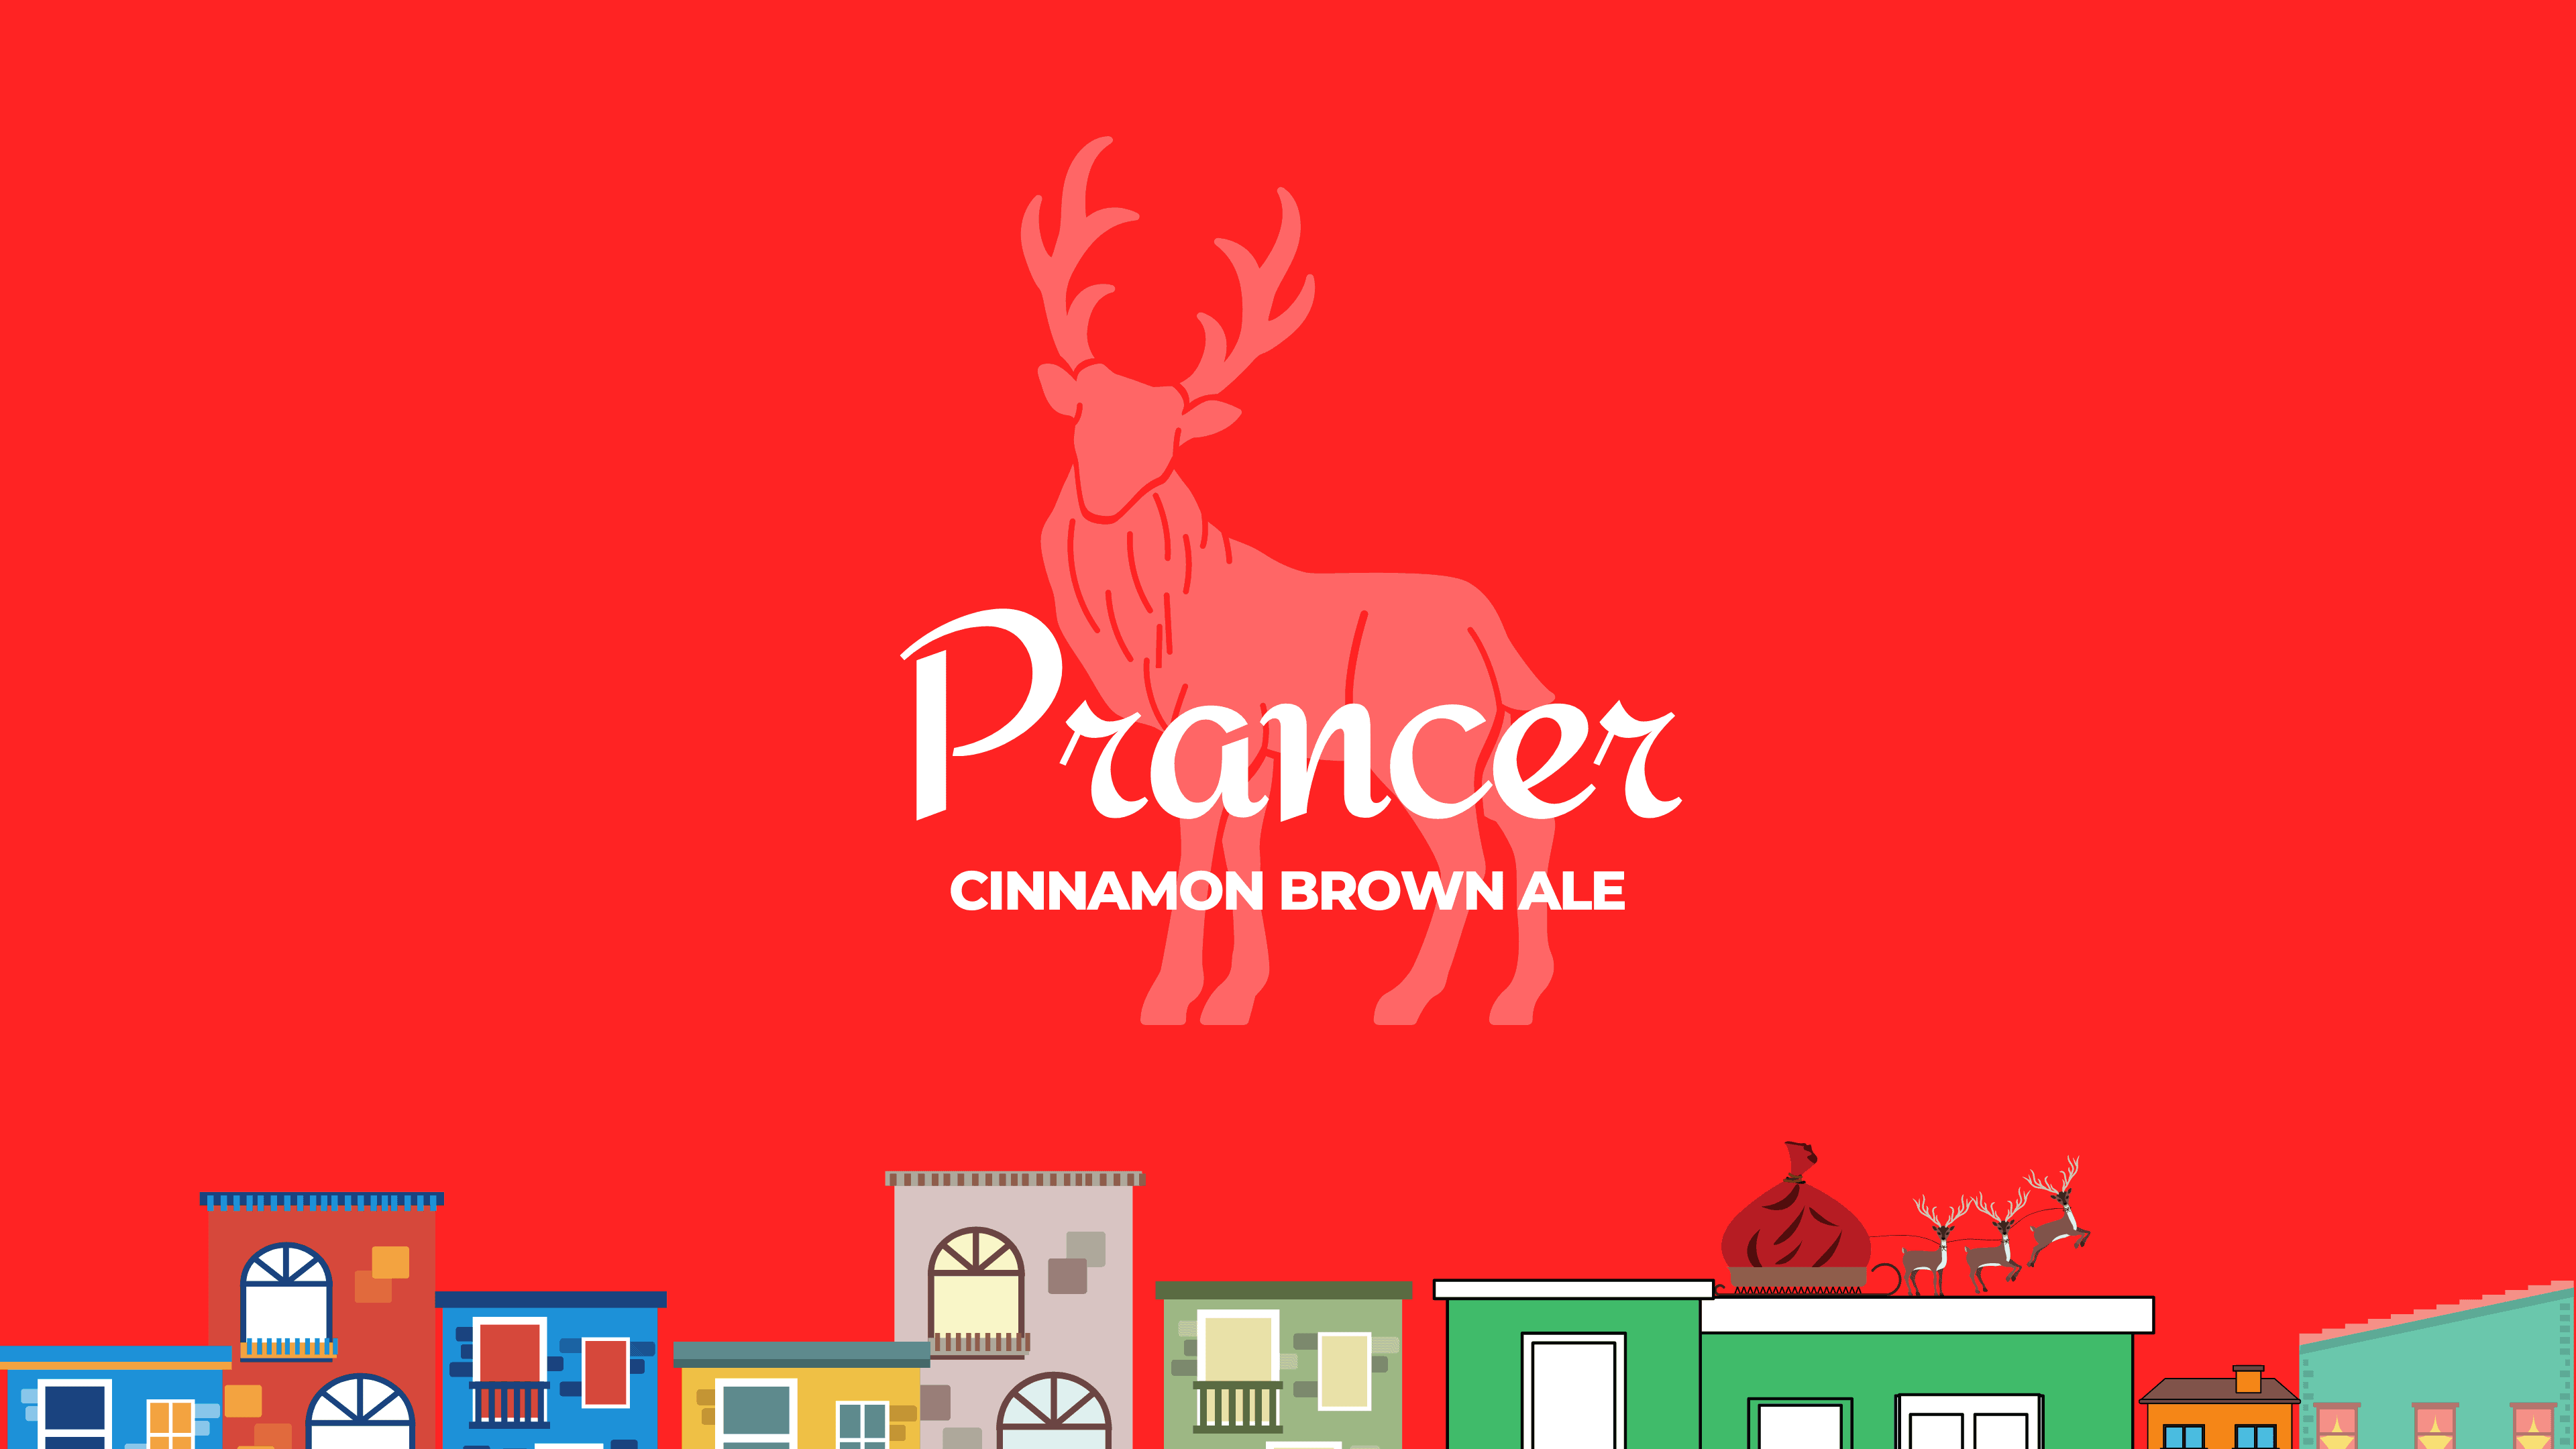 Prancer Cinnamon Brown Ale Release